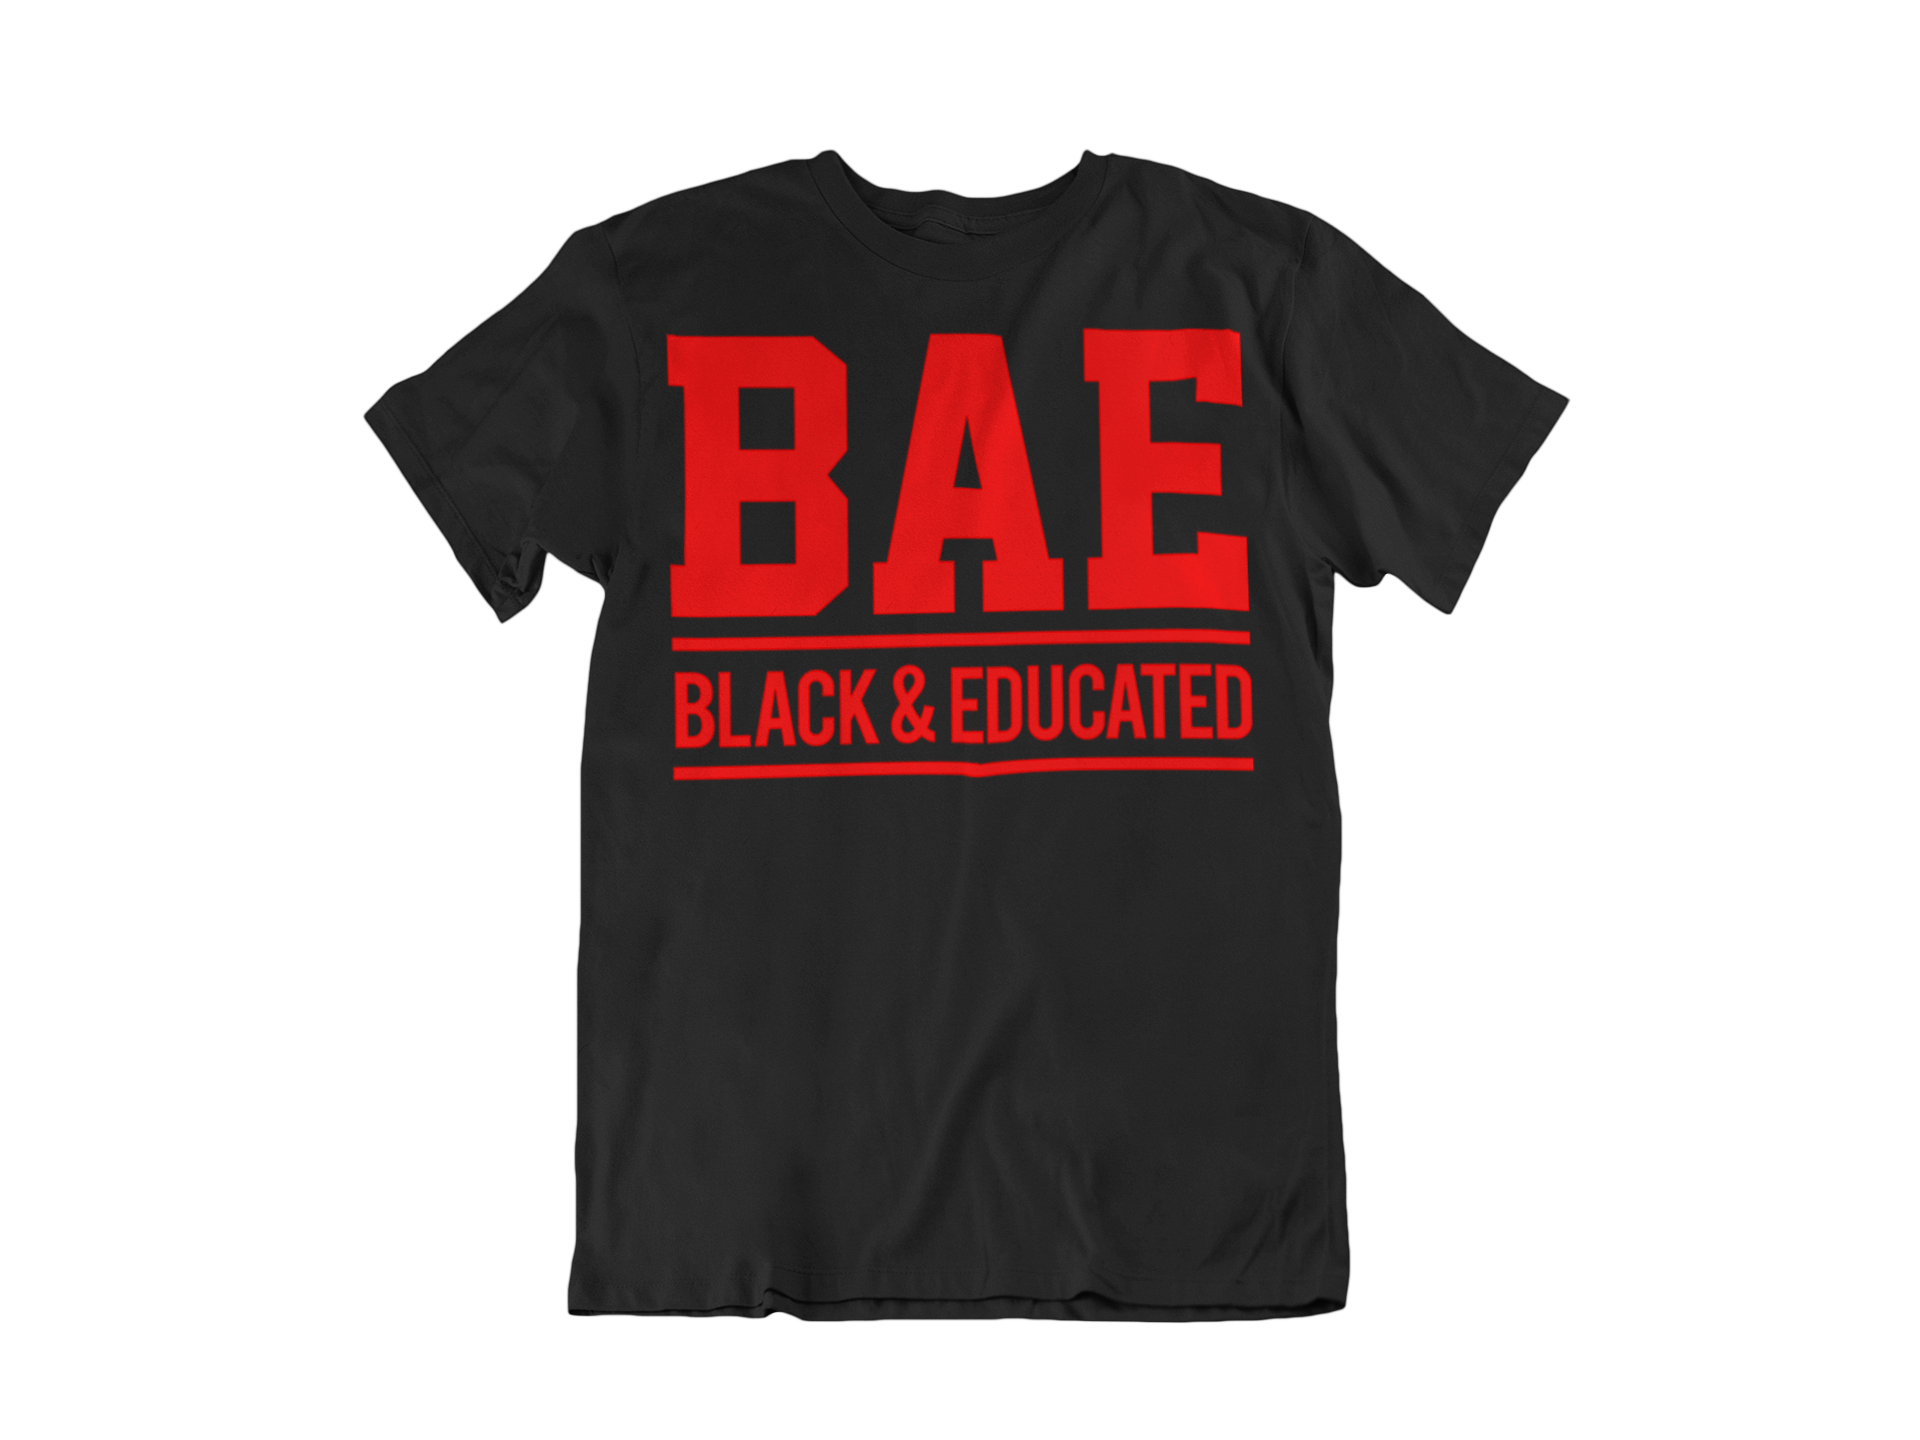 Black & Educated (BAE)